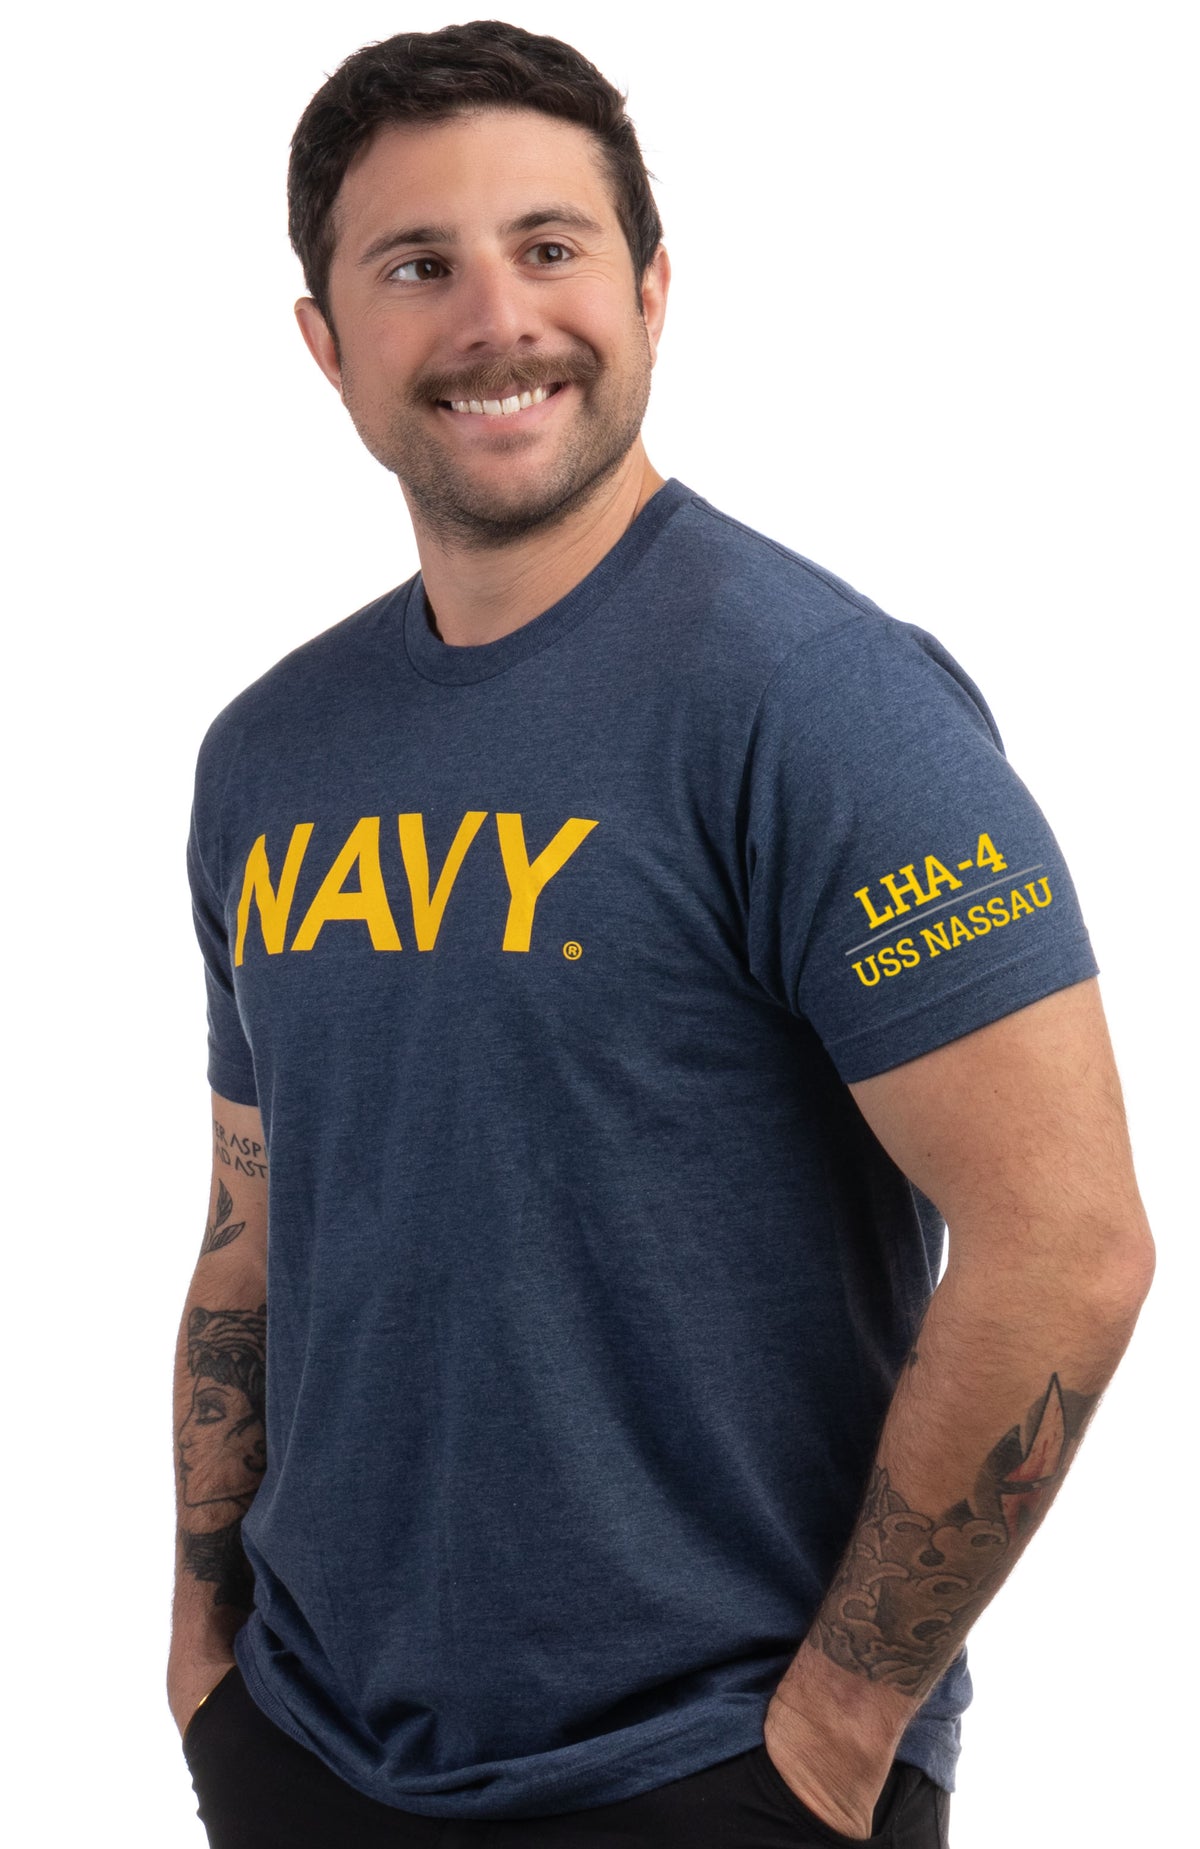 USS Nassau, LHA-4 | U.S. Navy Sailor Veteran USN United States Naval T-shirt for Men Women